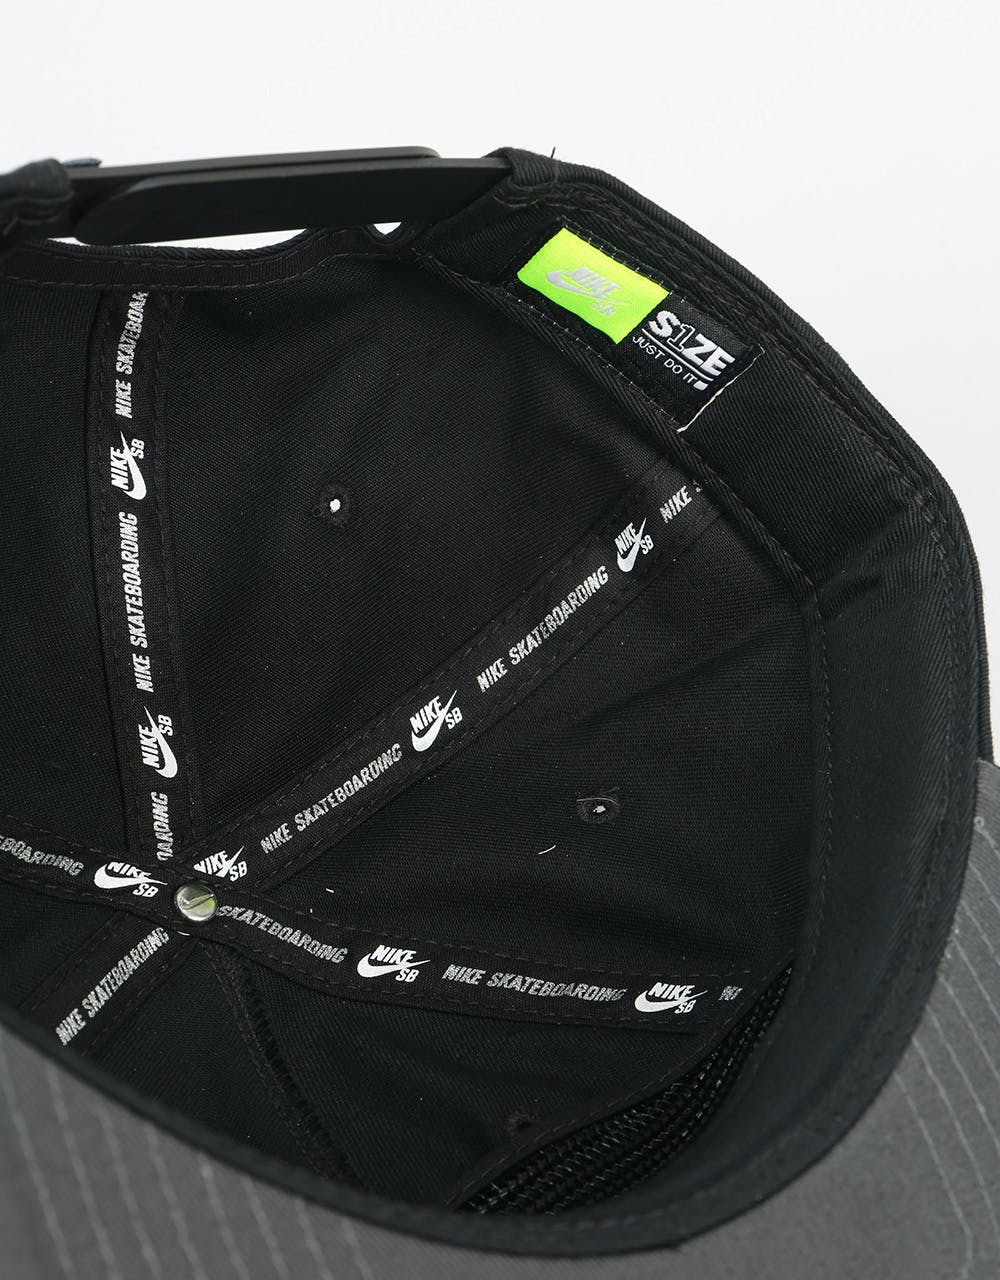 Nike SB Pro Snapback Cap - Black/Anthracite/Black